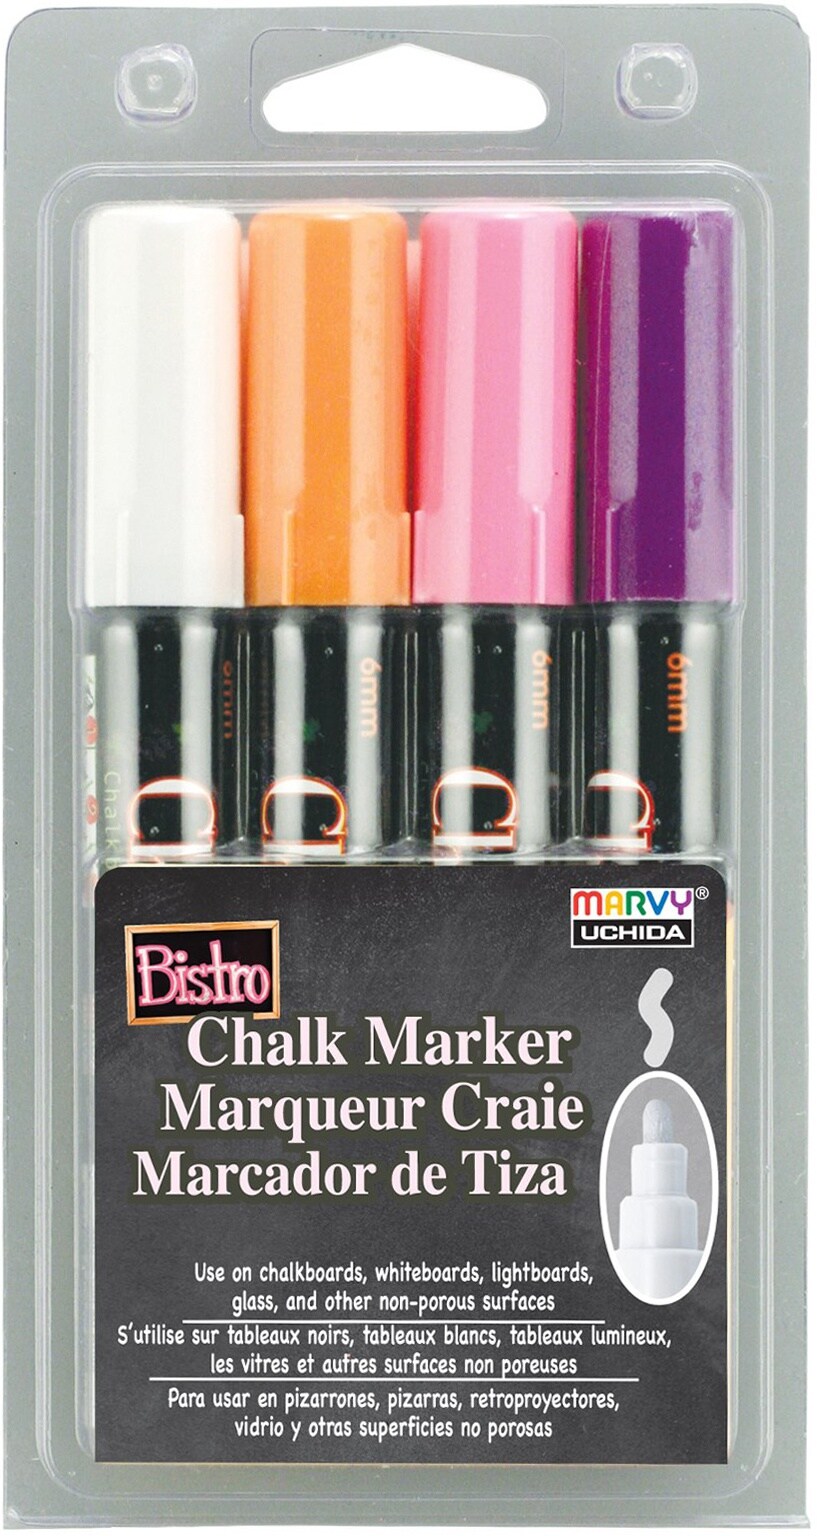 Marvy Uchida Bistro Chalk Marker Set - Assorted Colors, Set A, 6 mm